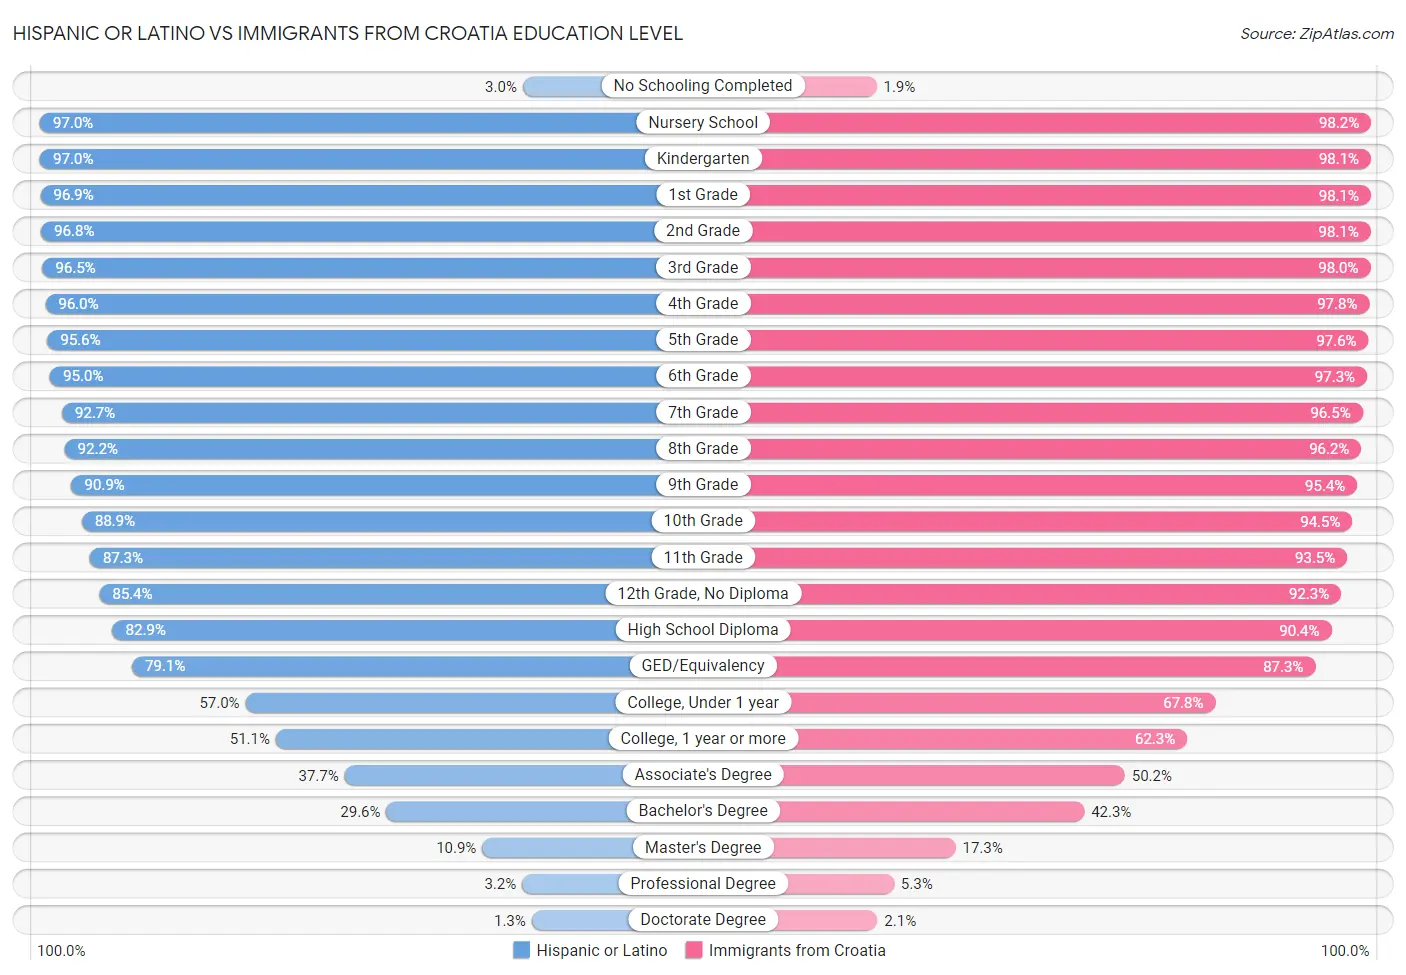 Hispanic or Latino vs Immigrants from Croatia Education Level